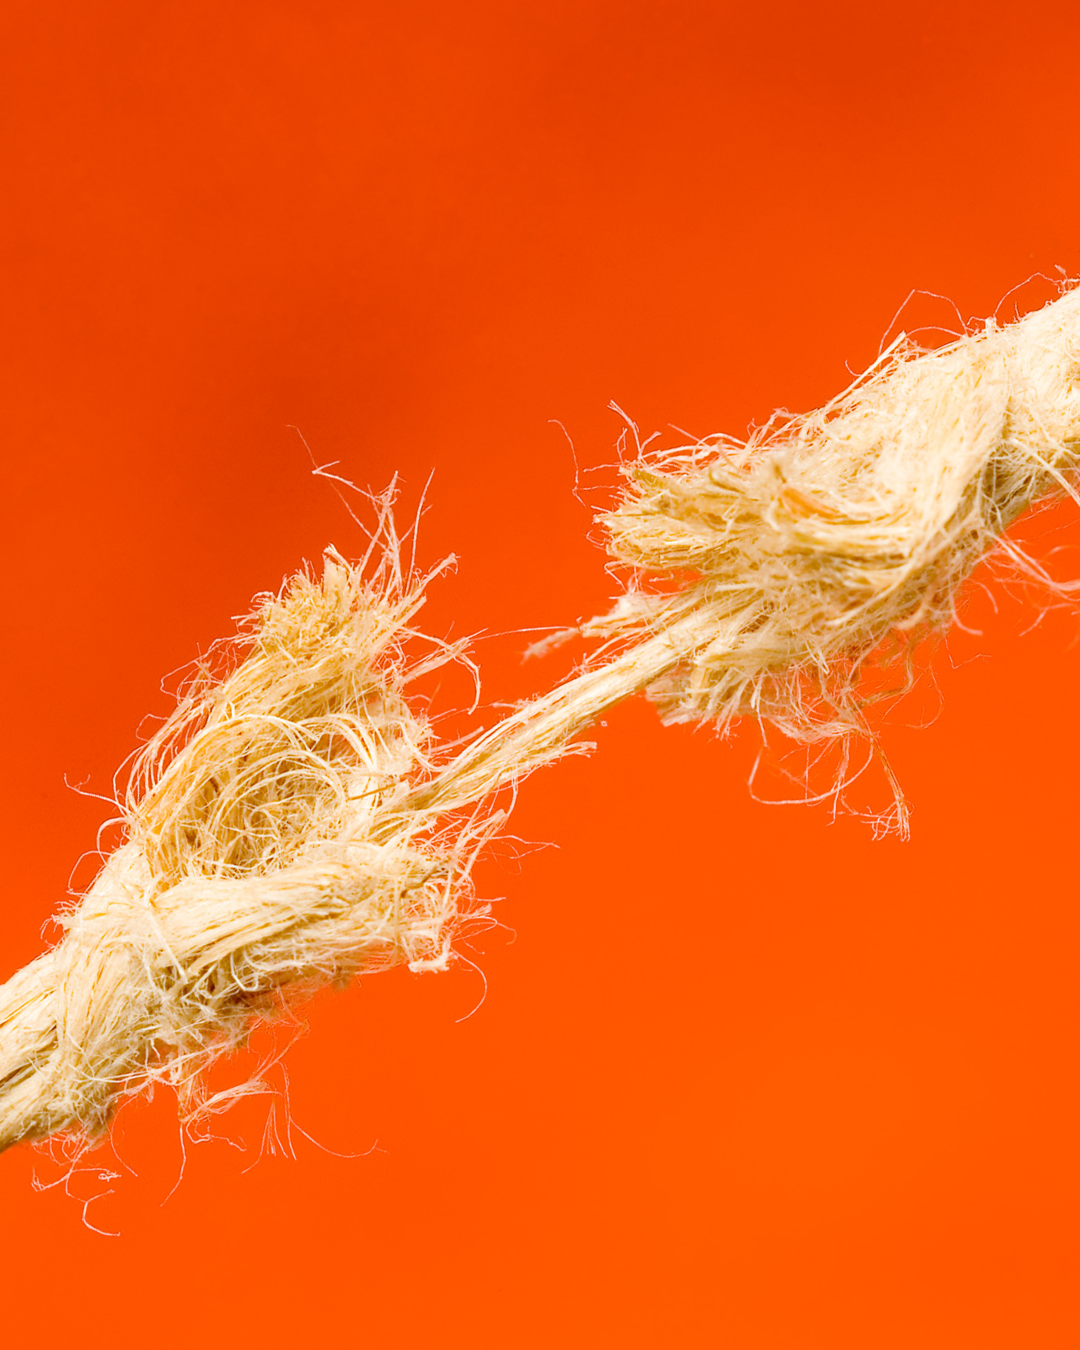 rope breaking on orange background